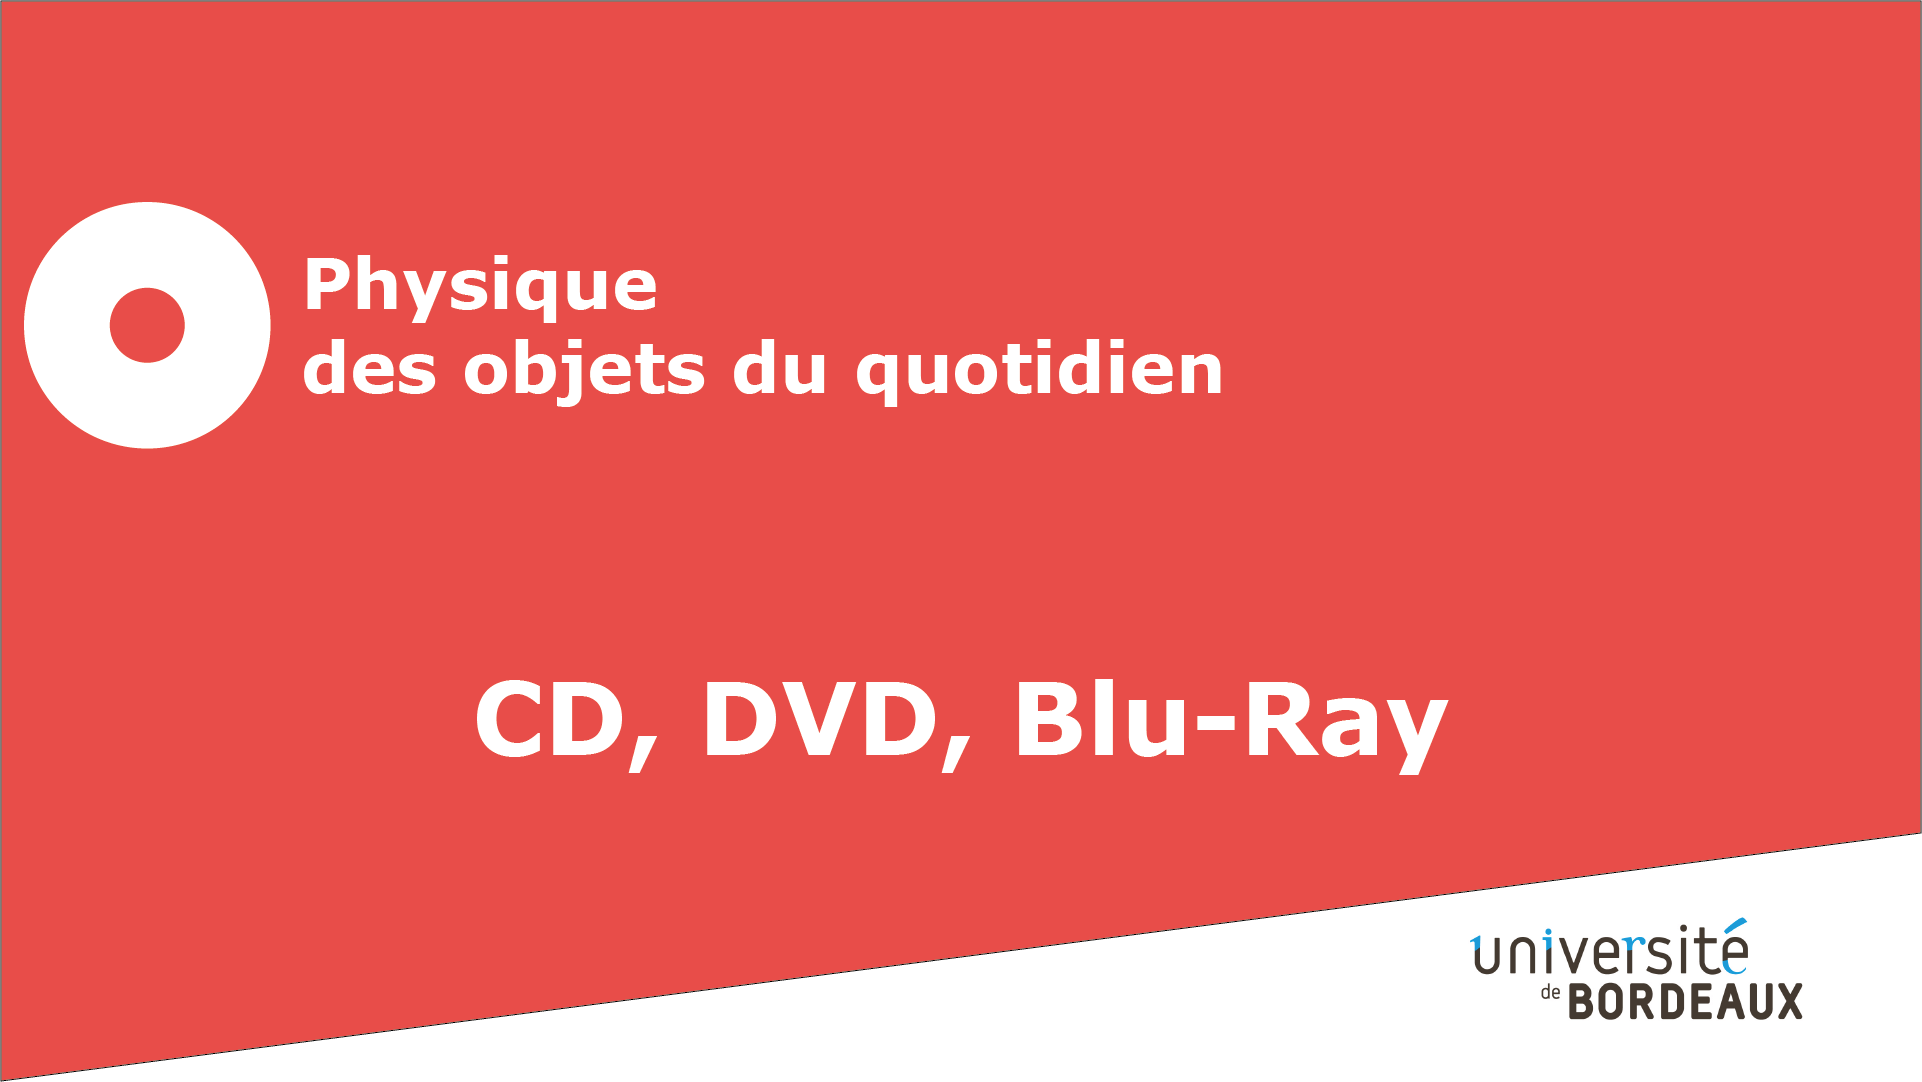 19 - CD, DVD, Blu-ray / Gravure et remise à zéro d'un CD-RW, DVD-RW